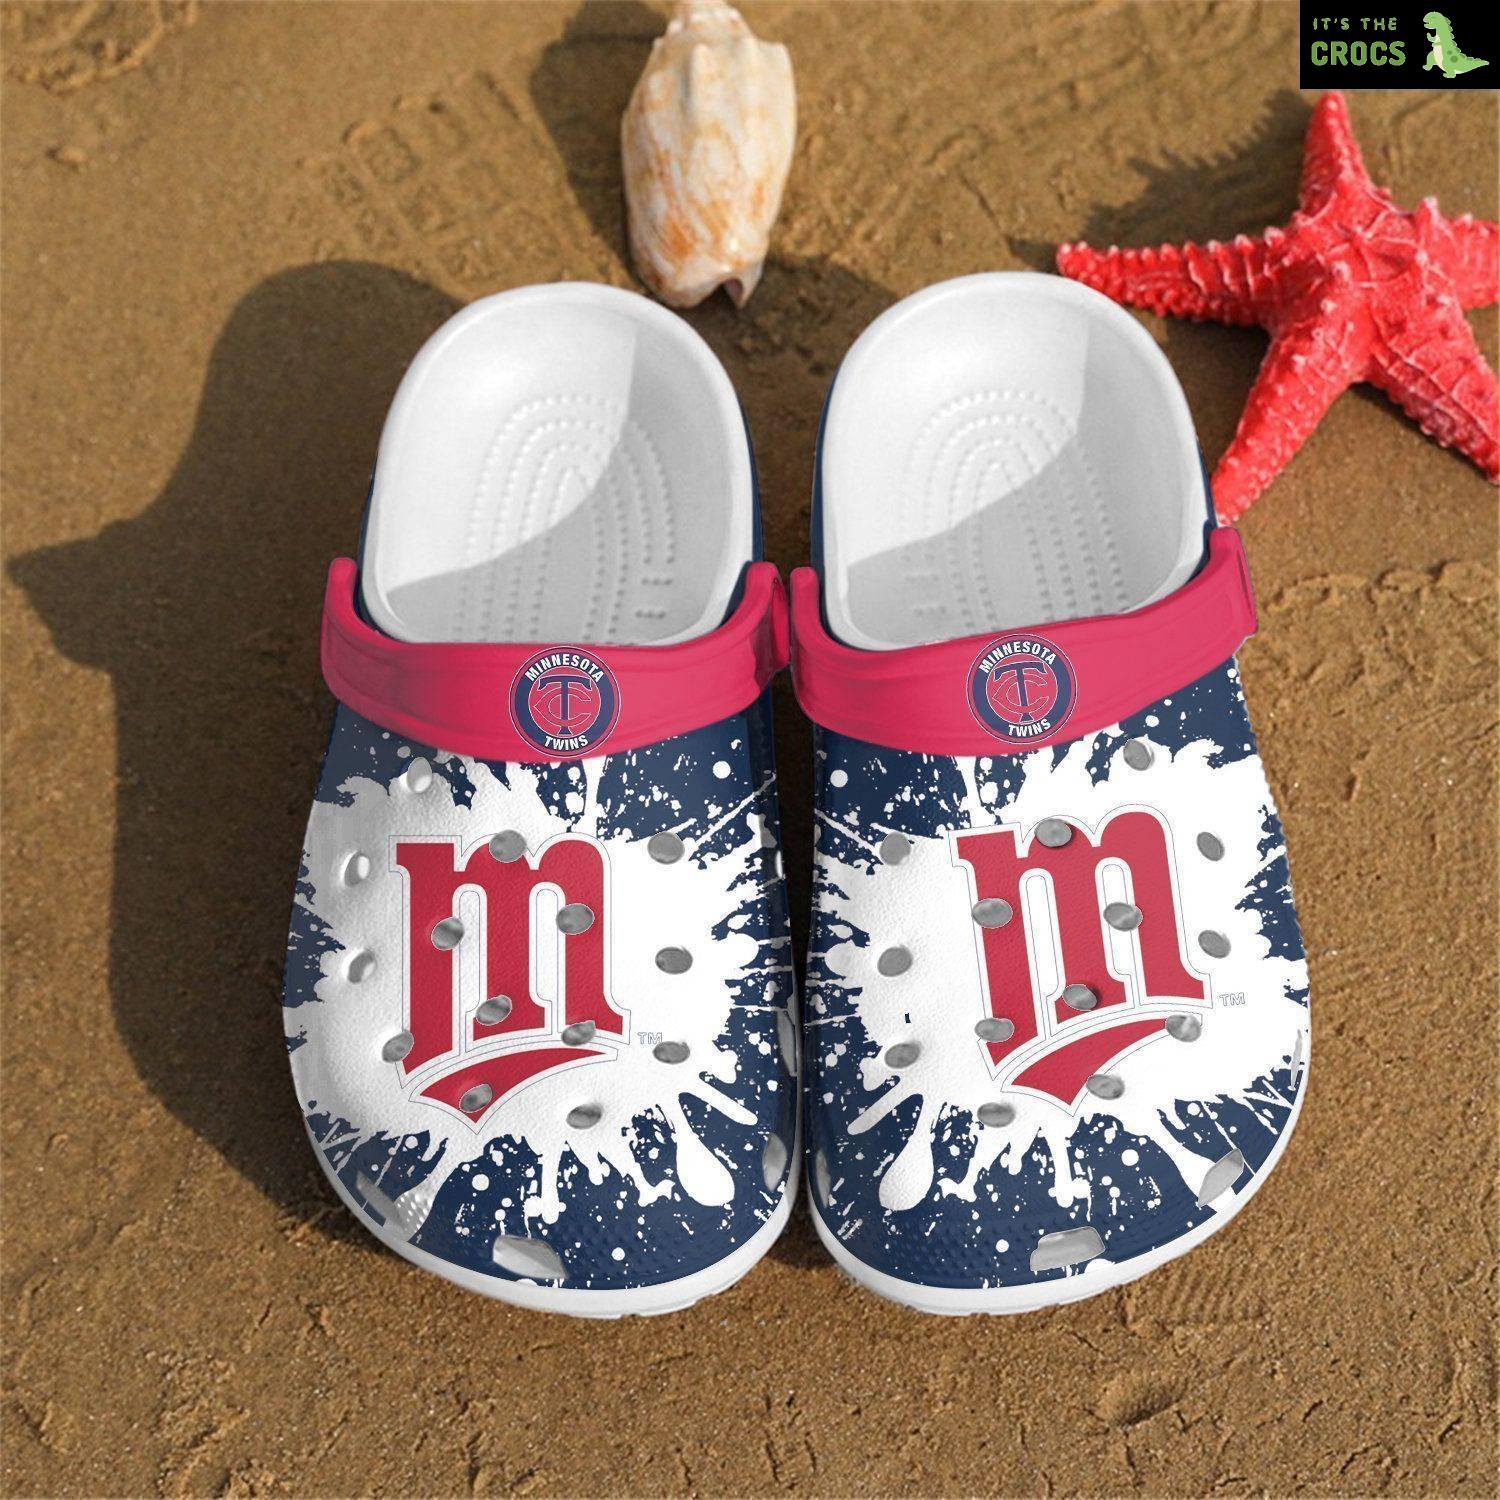 Mlb Minnesota Twins Rubber Crocs Clog Shoescrocband Clogs Comfy Footwear